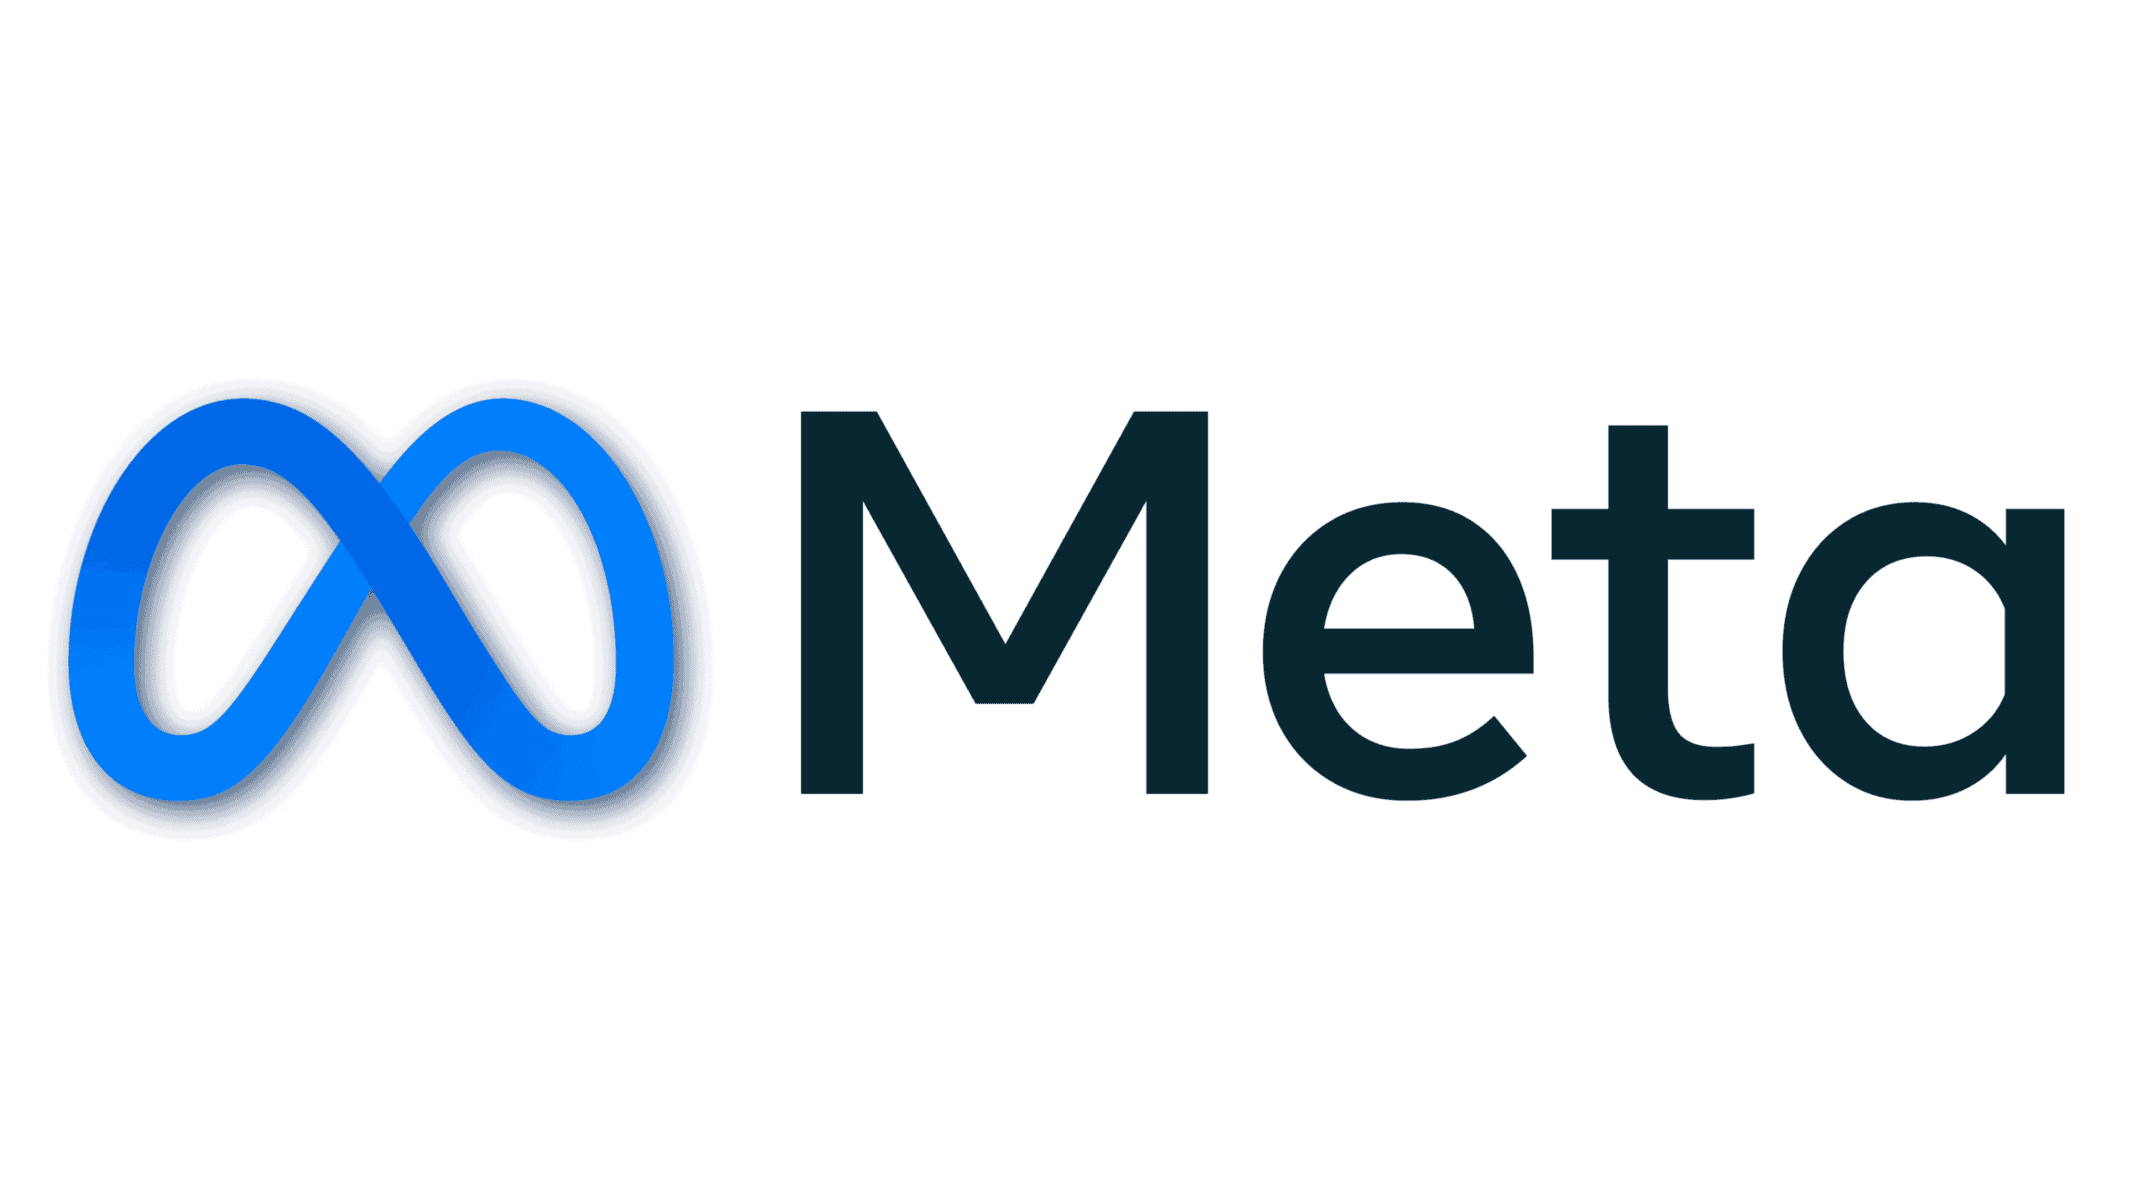 Meta's logo and name are shown.